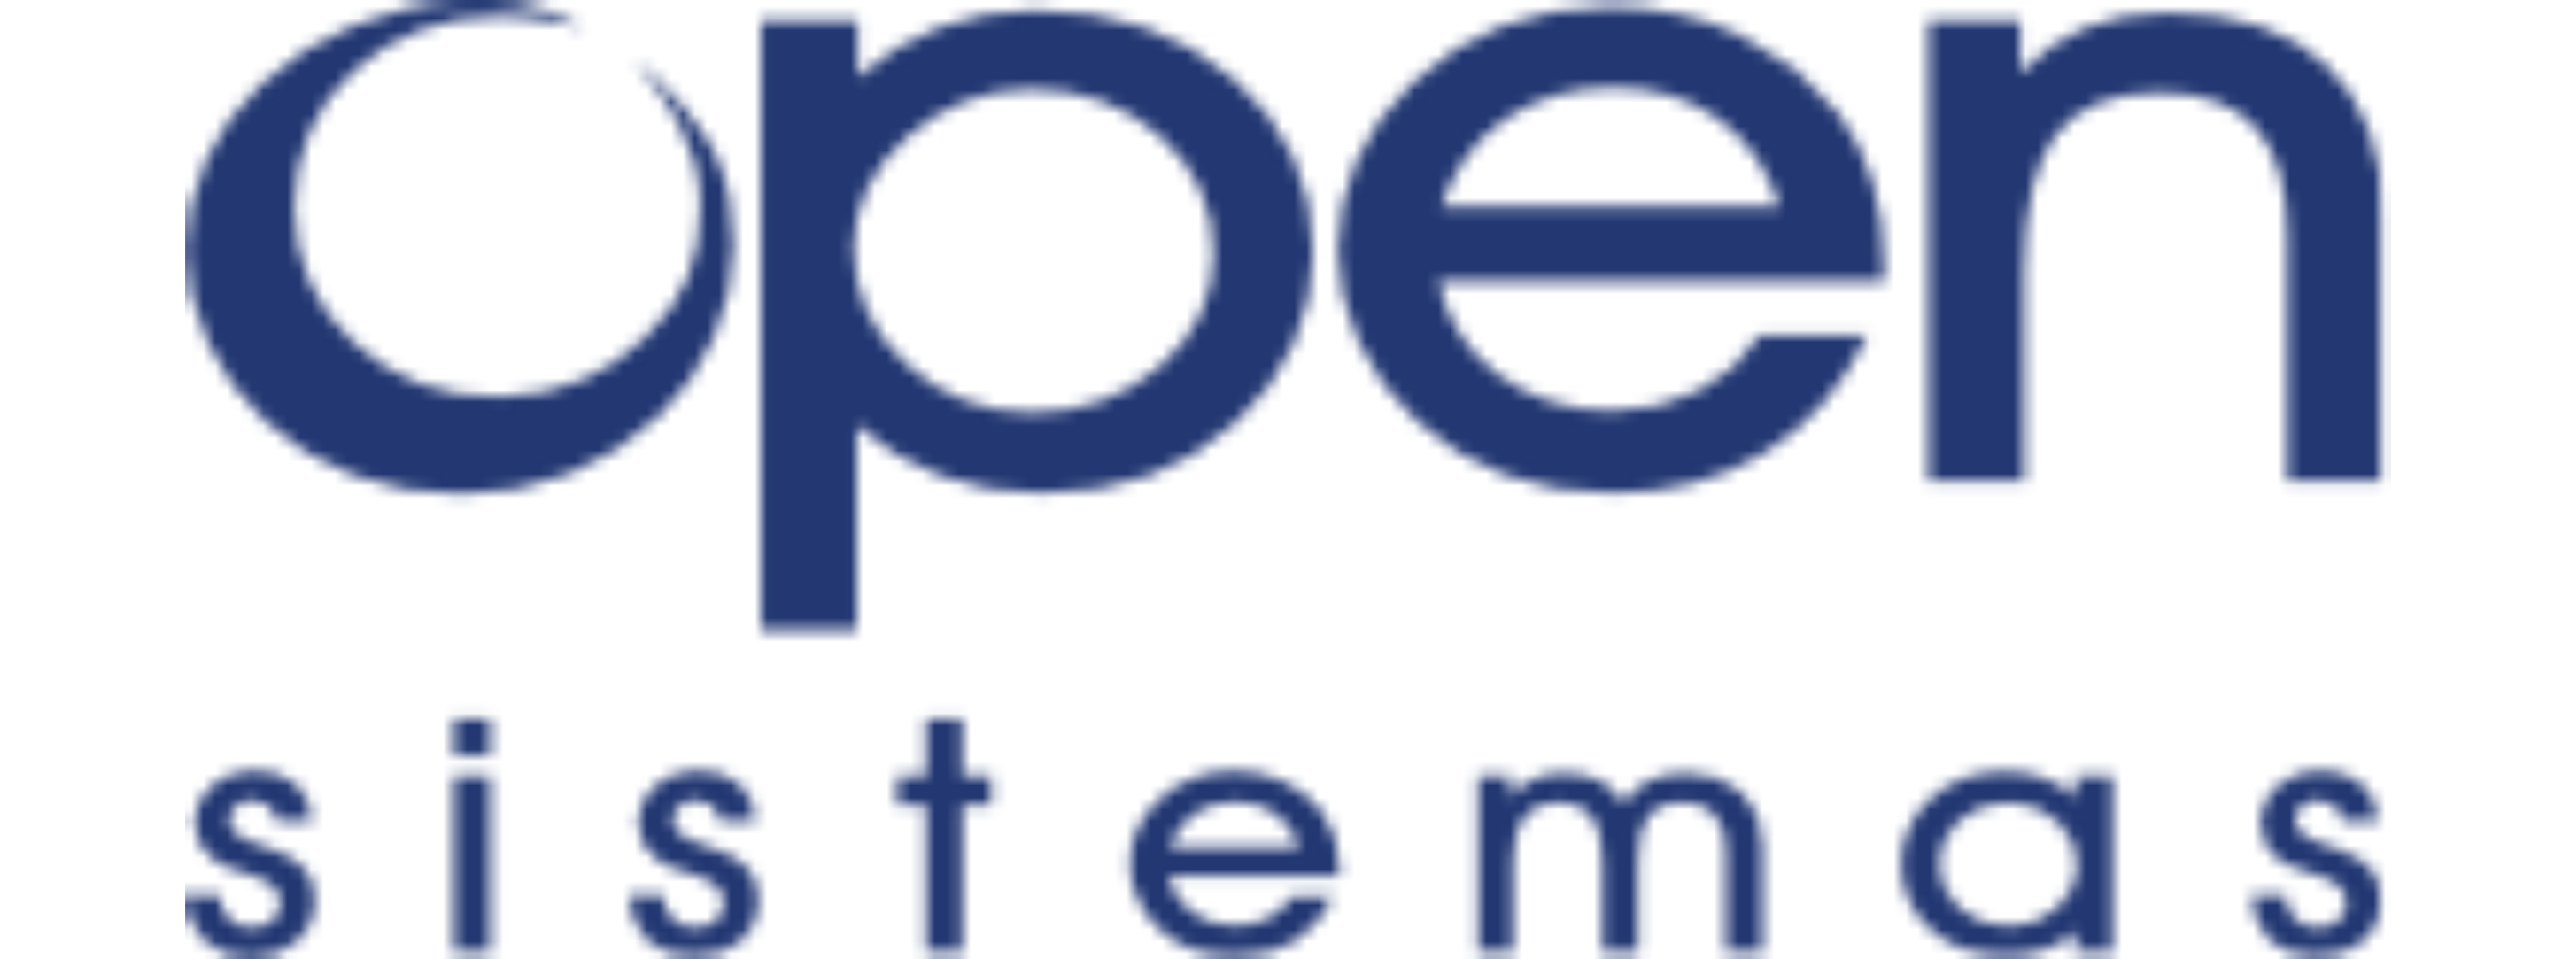 Logo-OpenSistemas.png